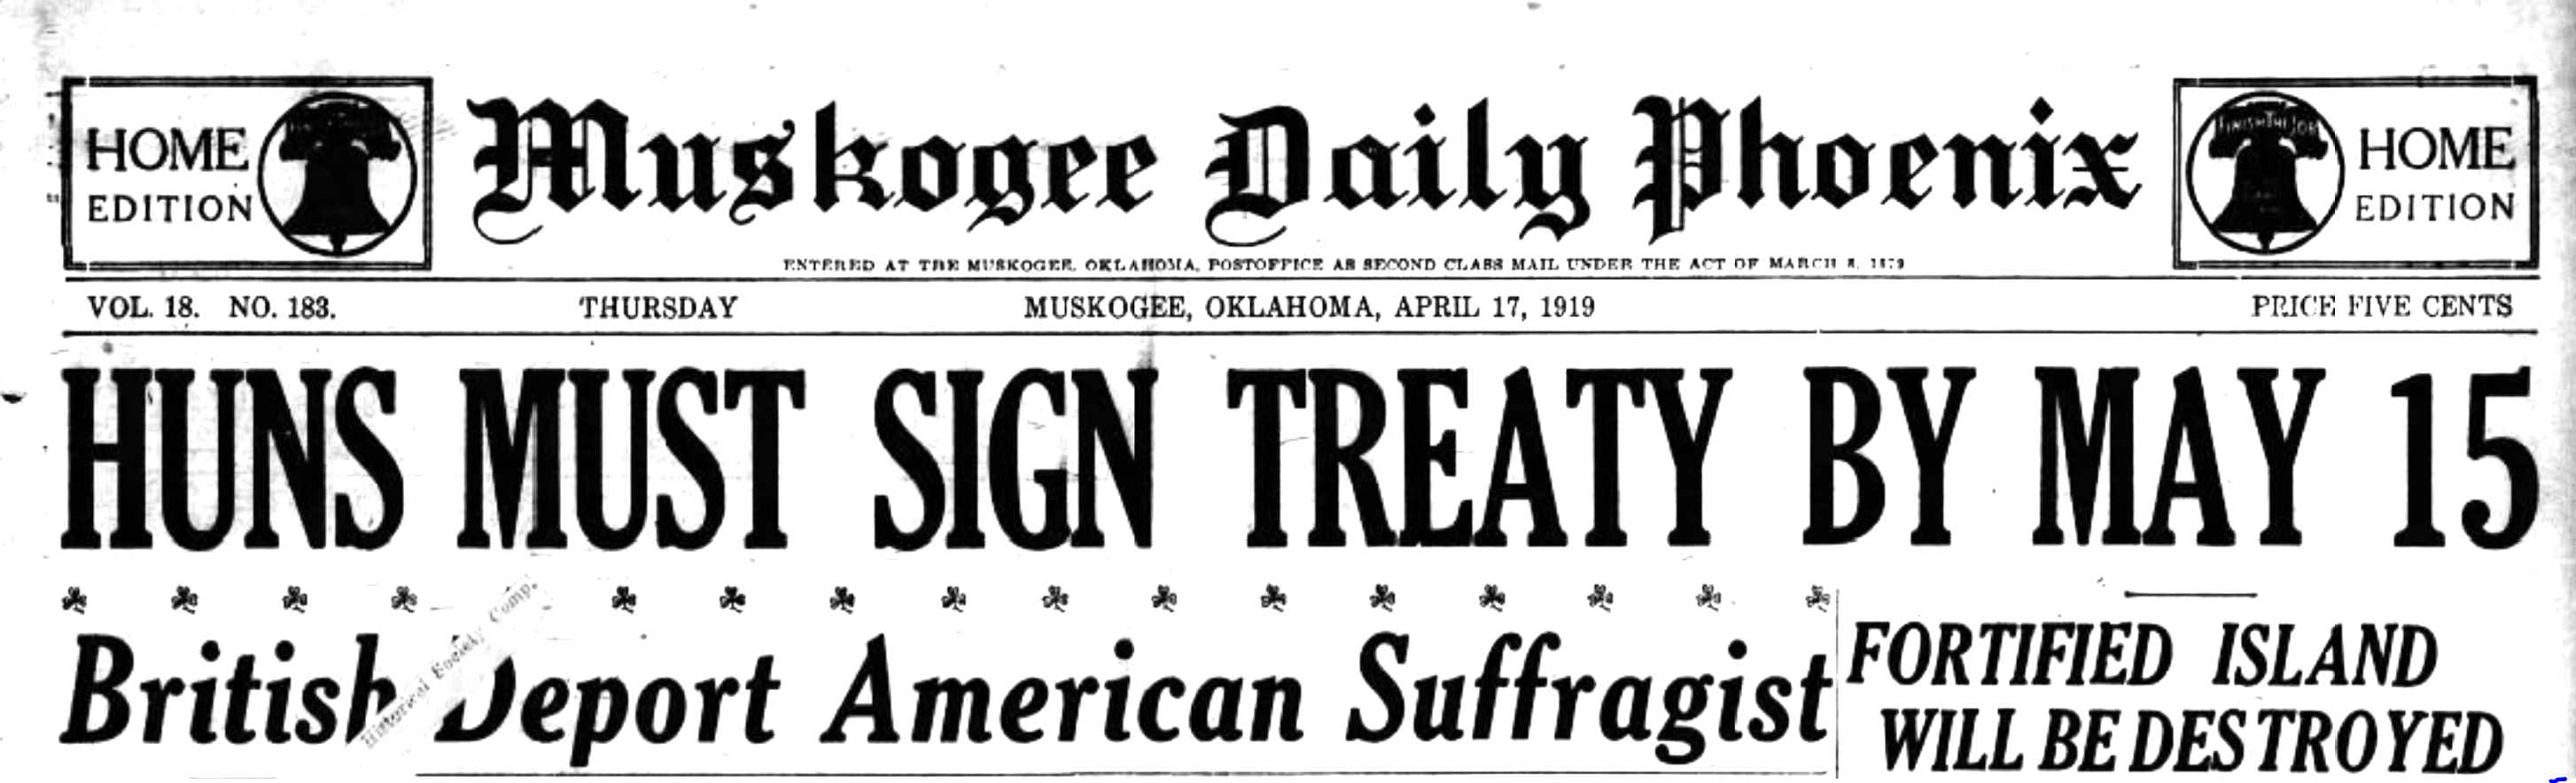 Editor. (Apr. 17, 1919). British Deport American Suffragist [Lillian Scott Troy], p. 1. Muskogee Daily Phoenix and Times-Democrat (Muskogee, Oklahoma.